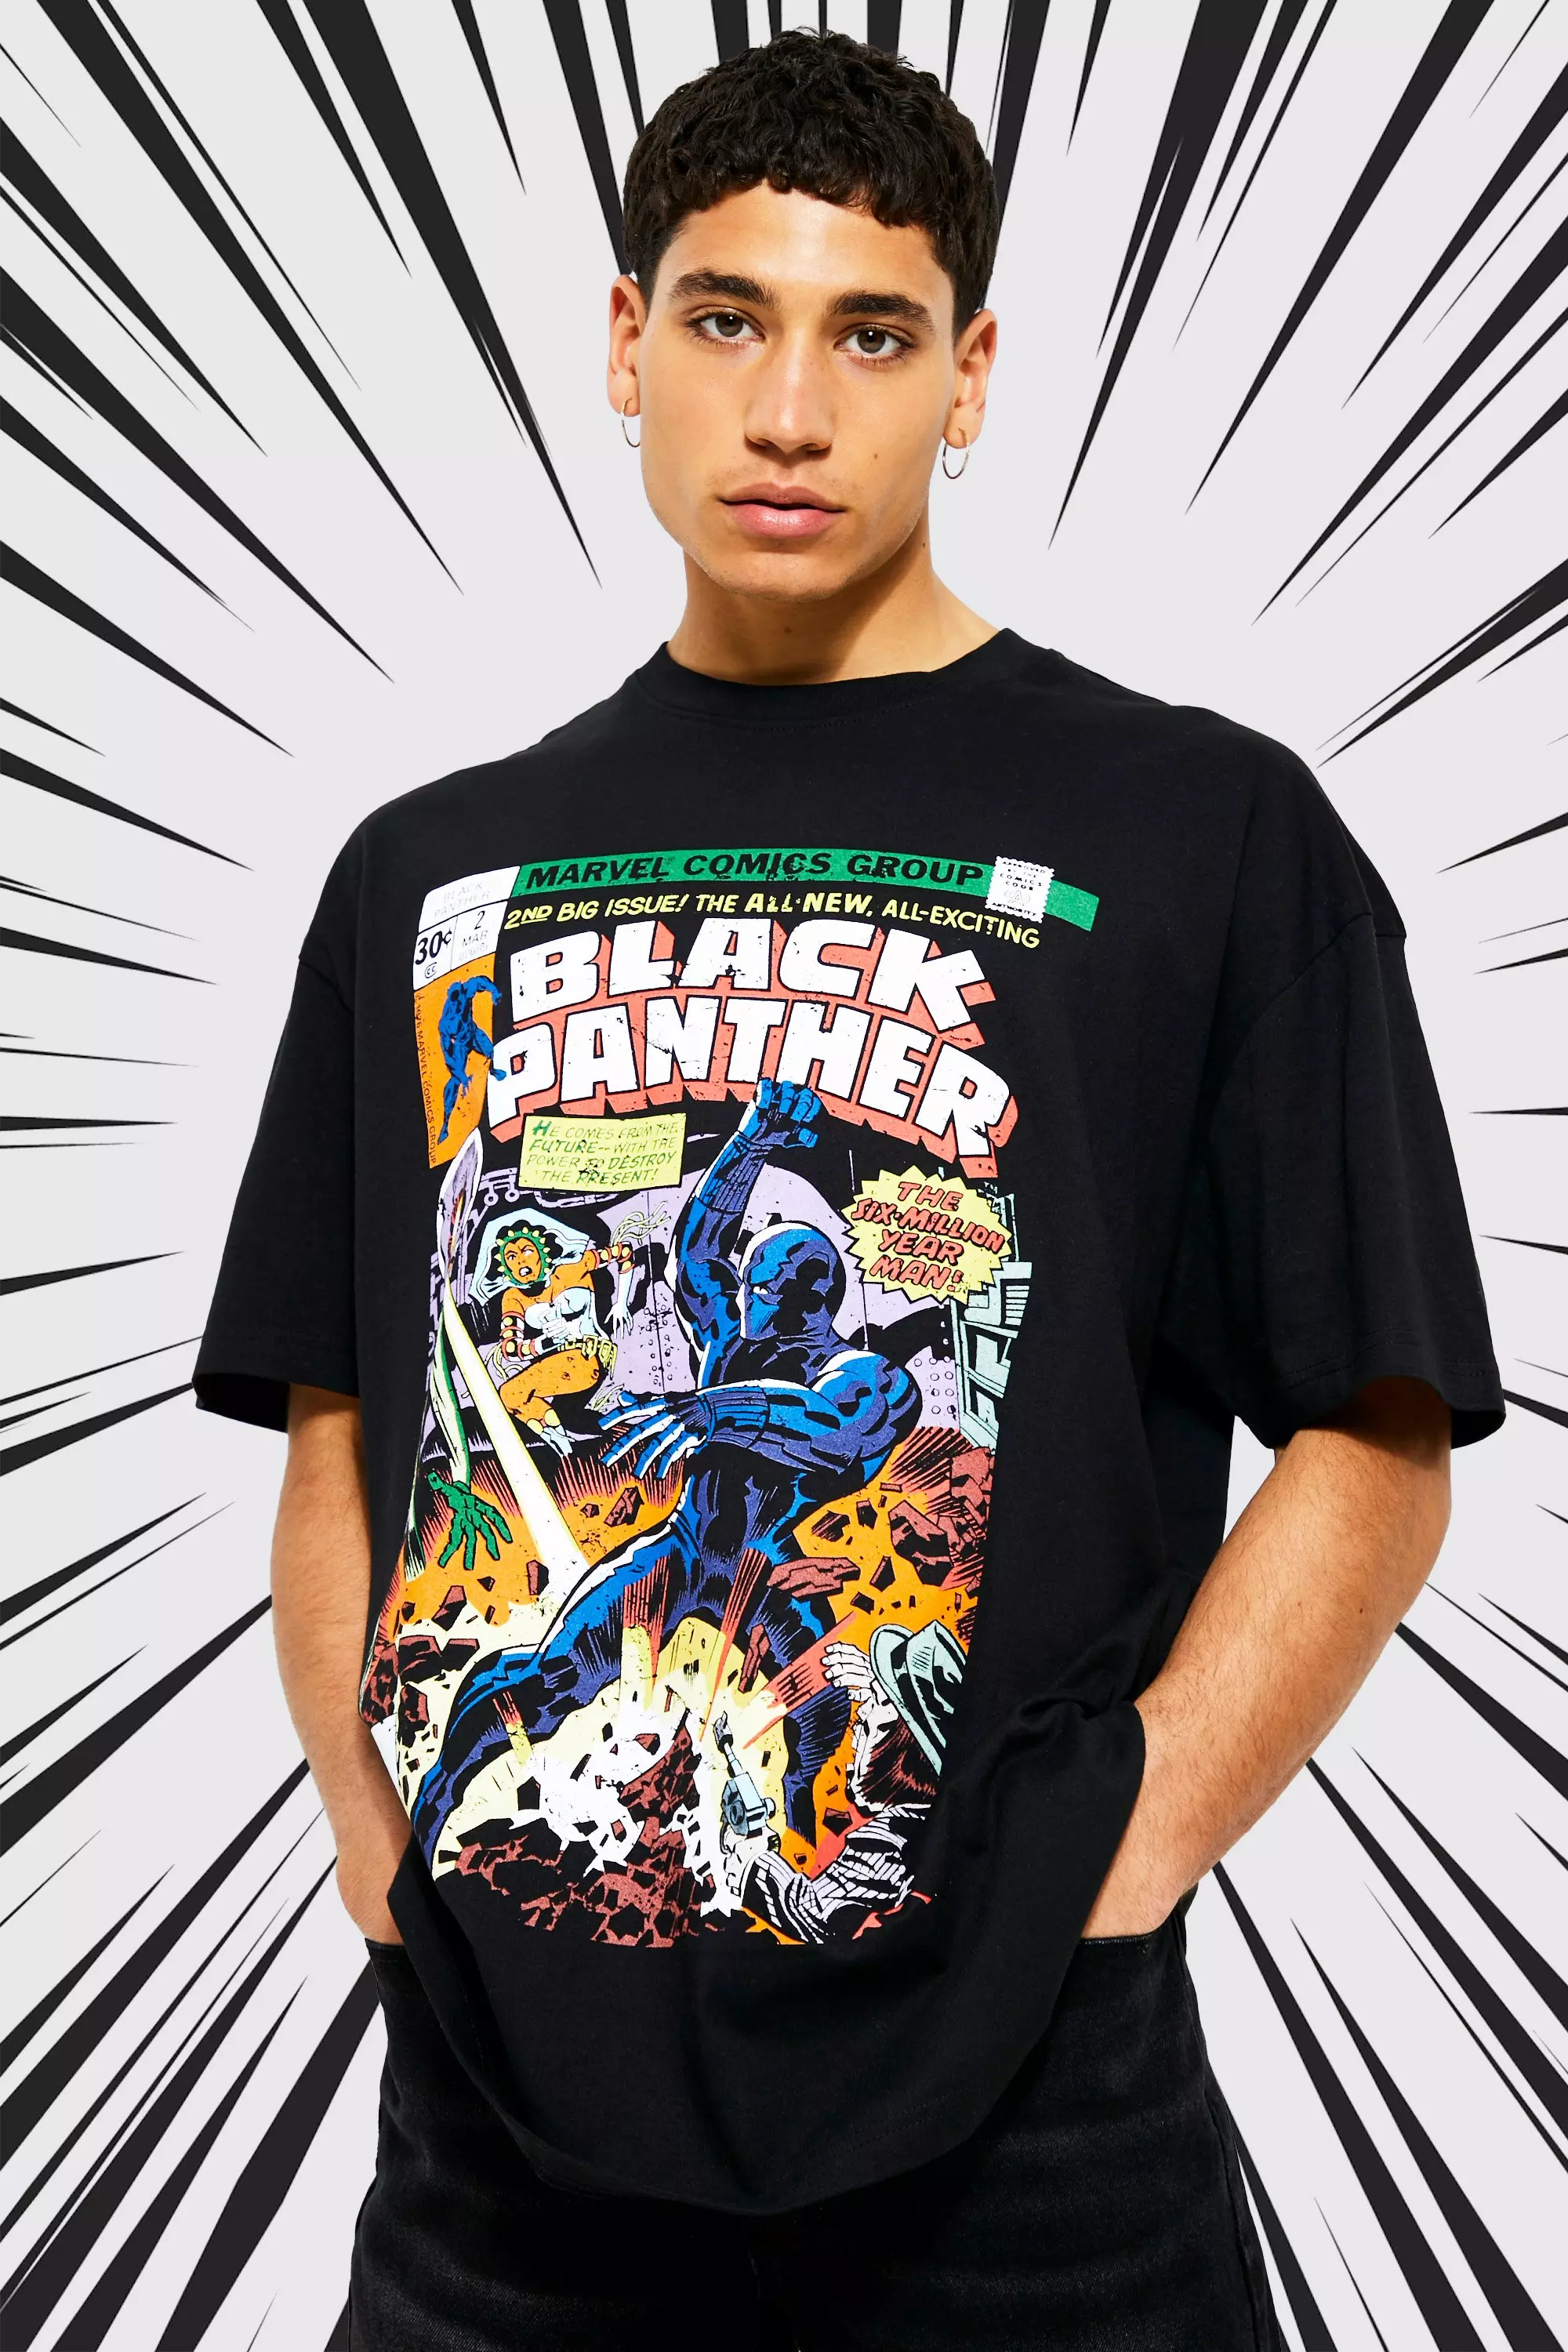 Oversized Black Panther Comic License T-shirt Black